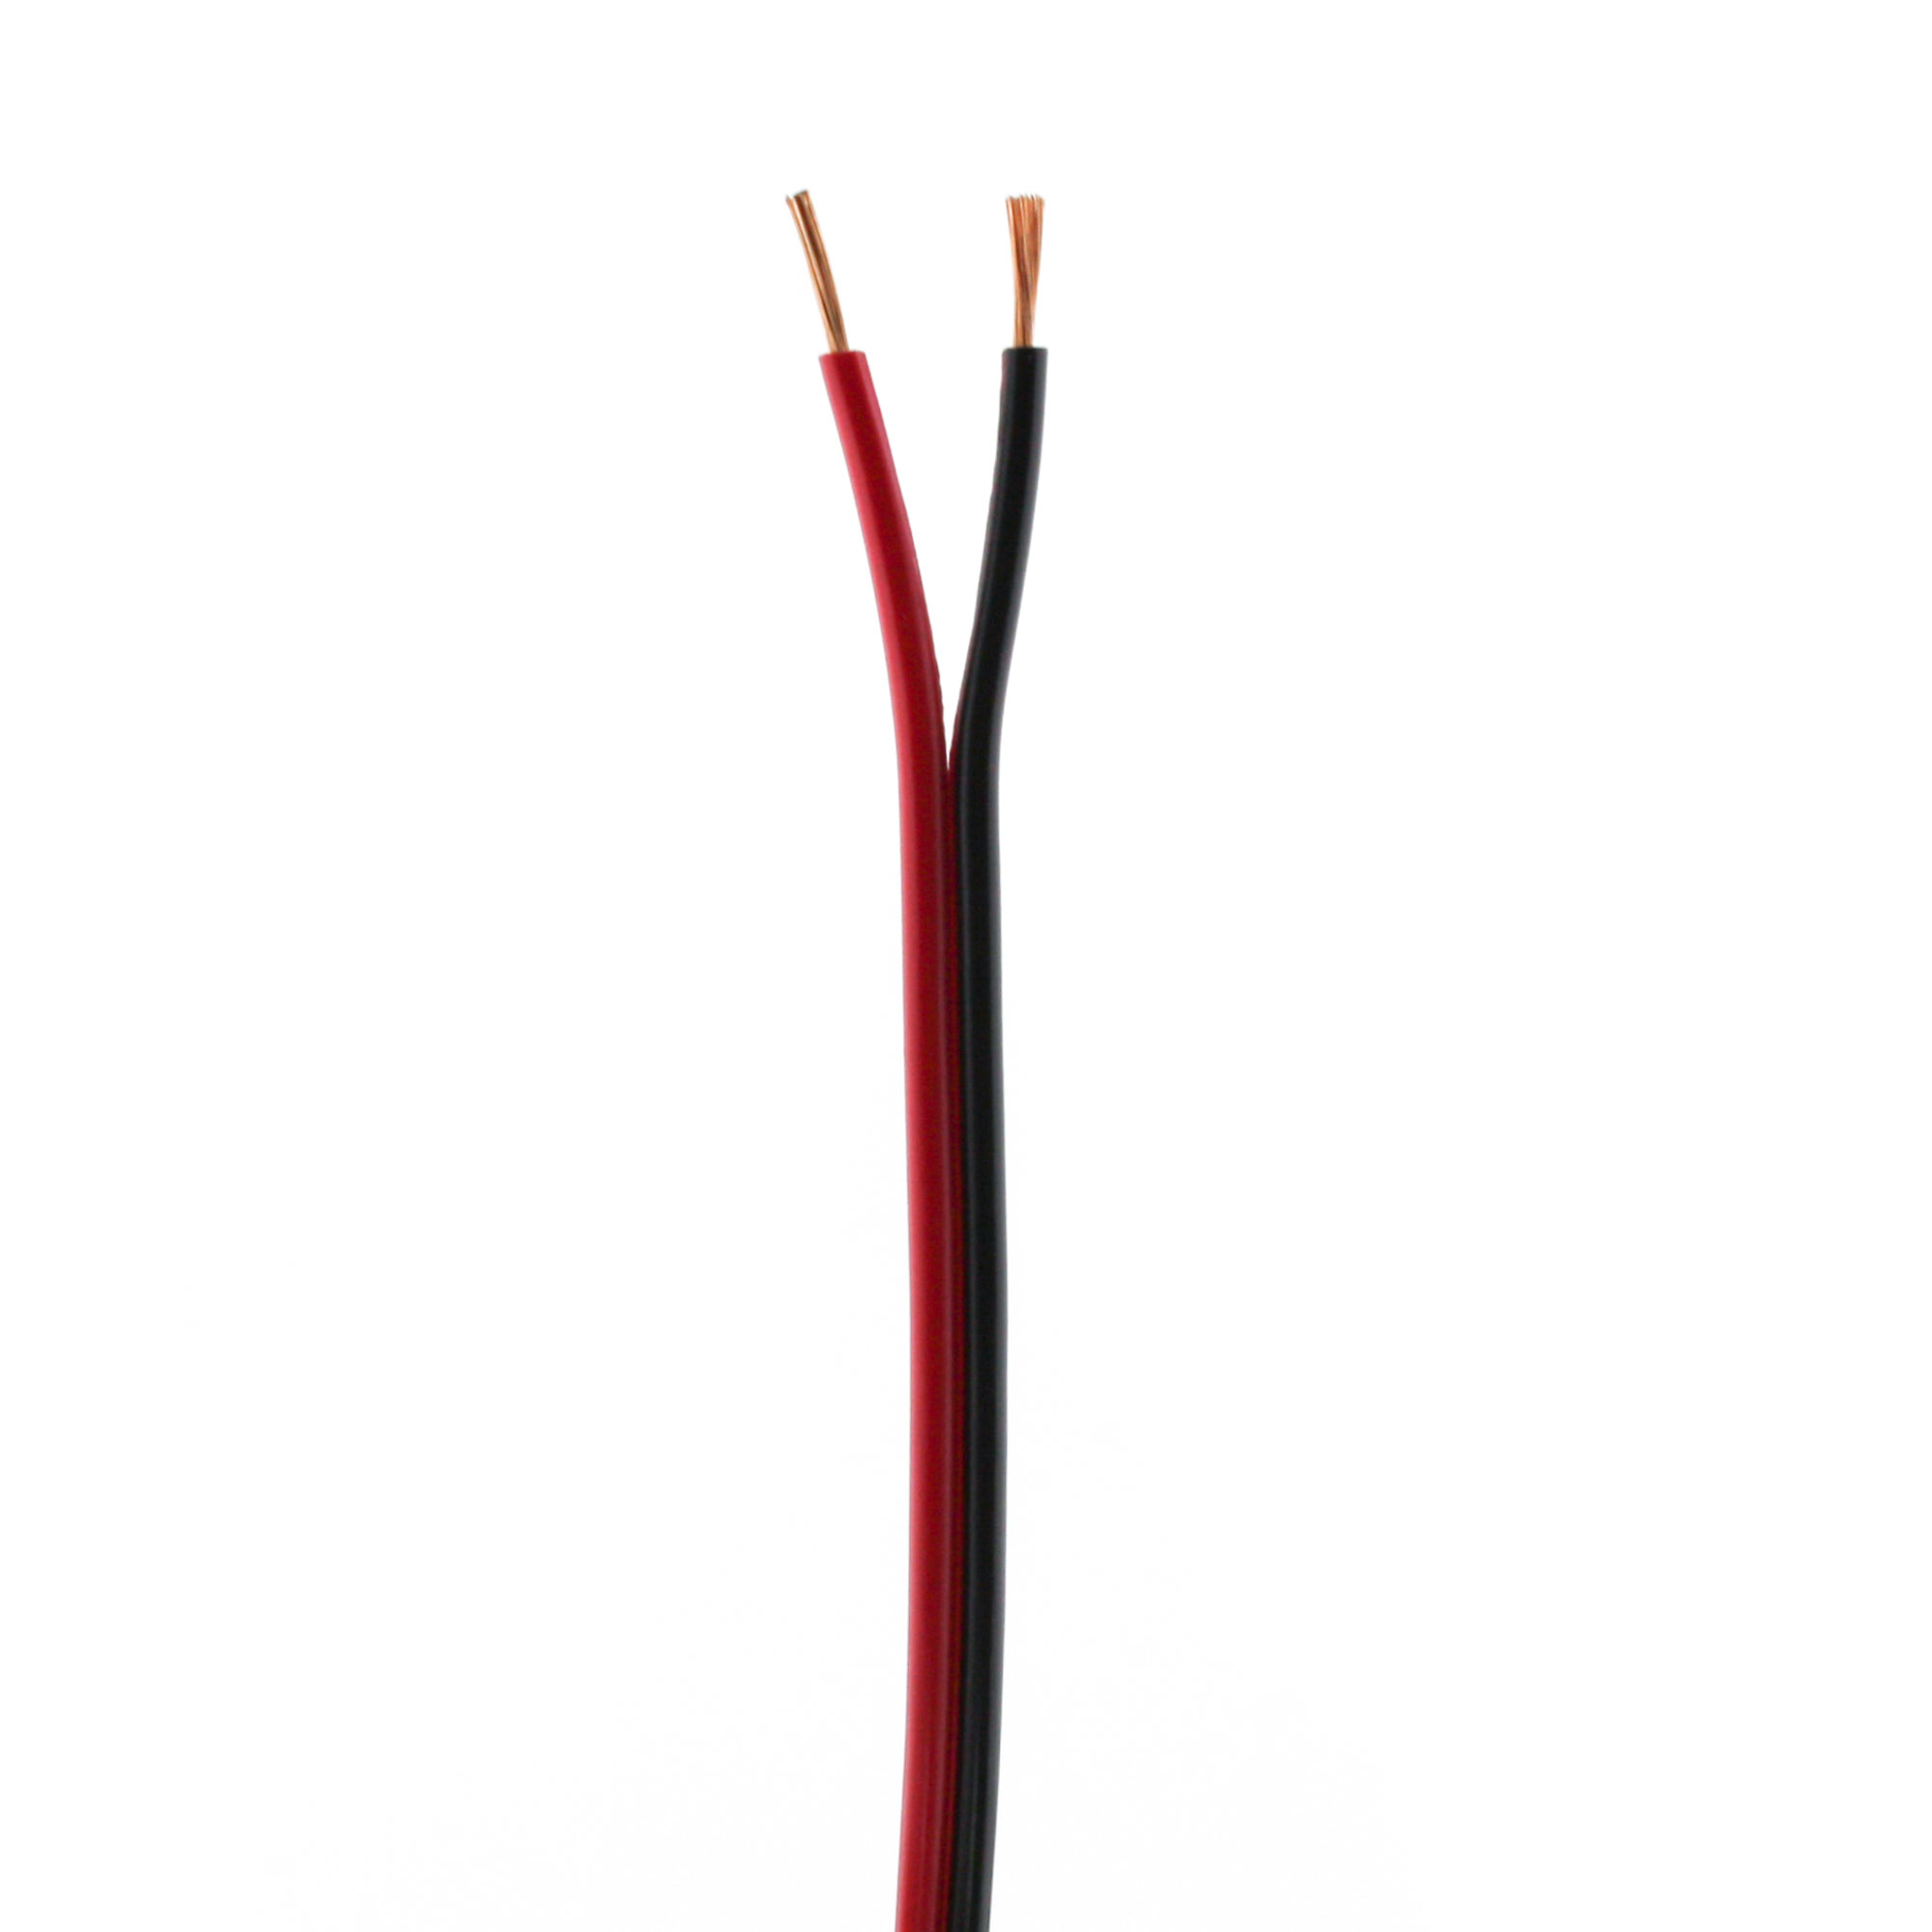 Loudspeaker cable red/black 10m 0.50mm